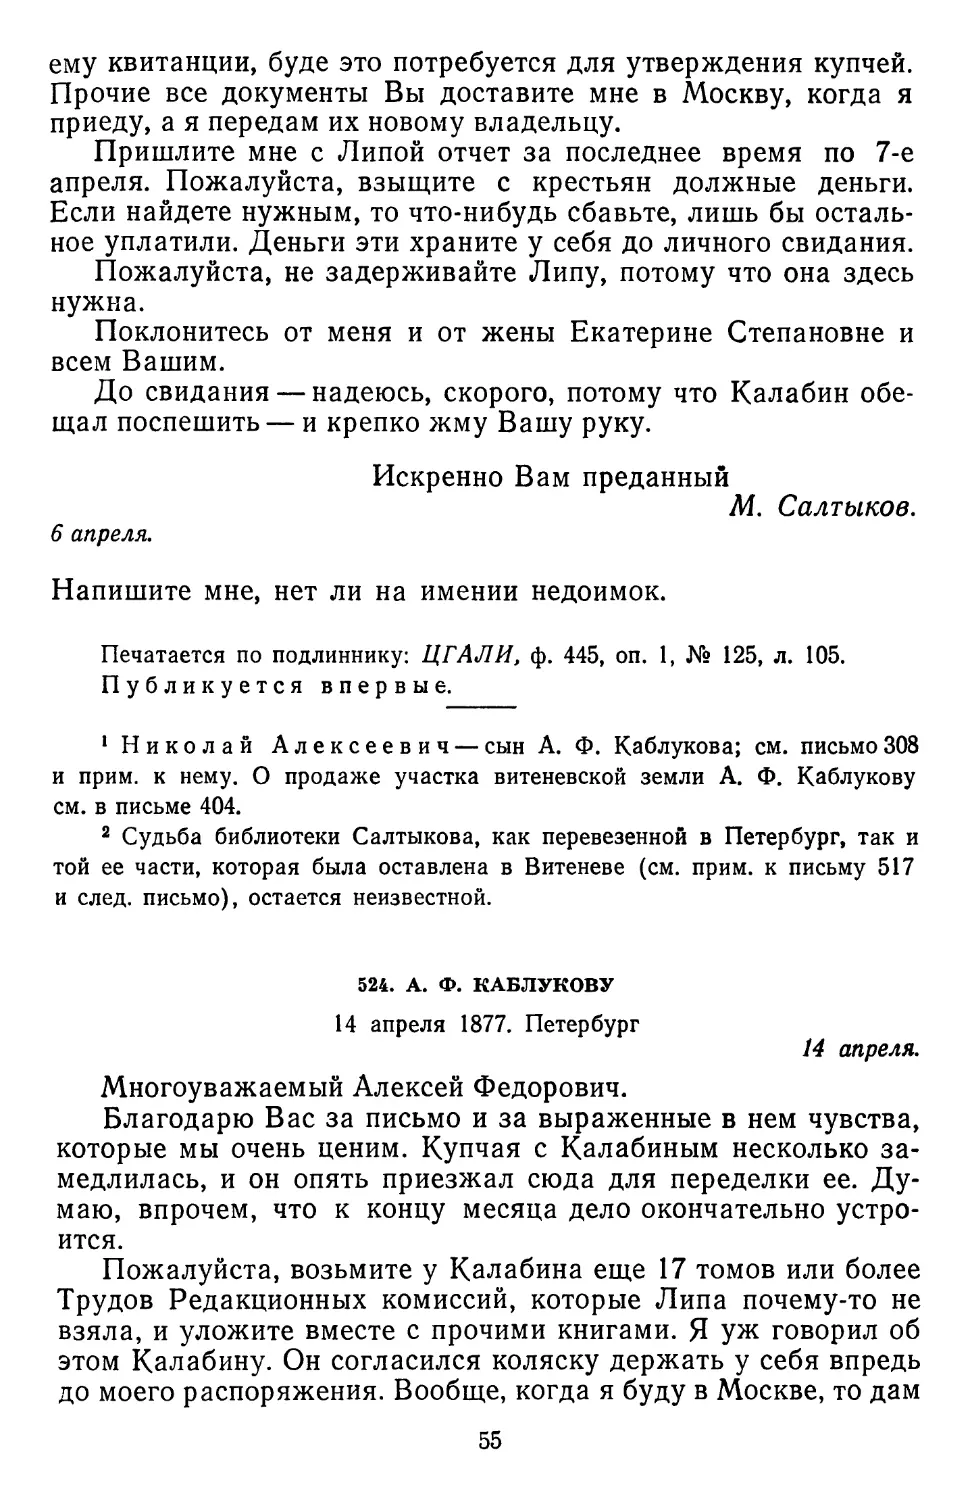 524.А.Ф. Каблукову. 14 апреля 1877.Петербург